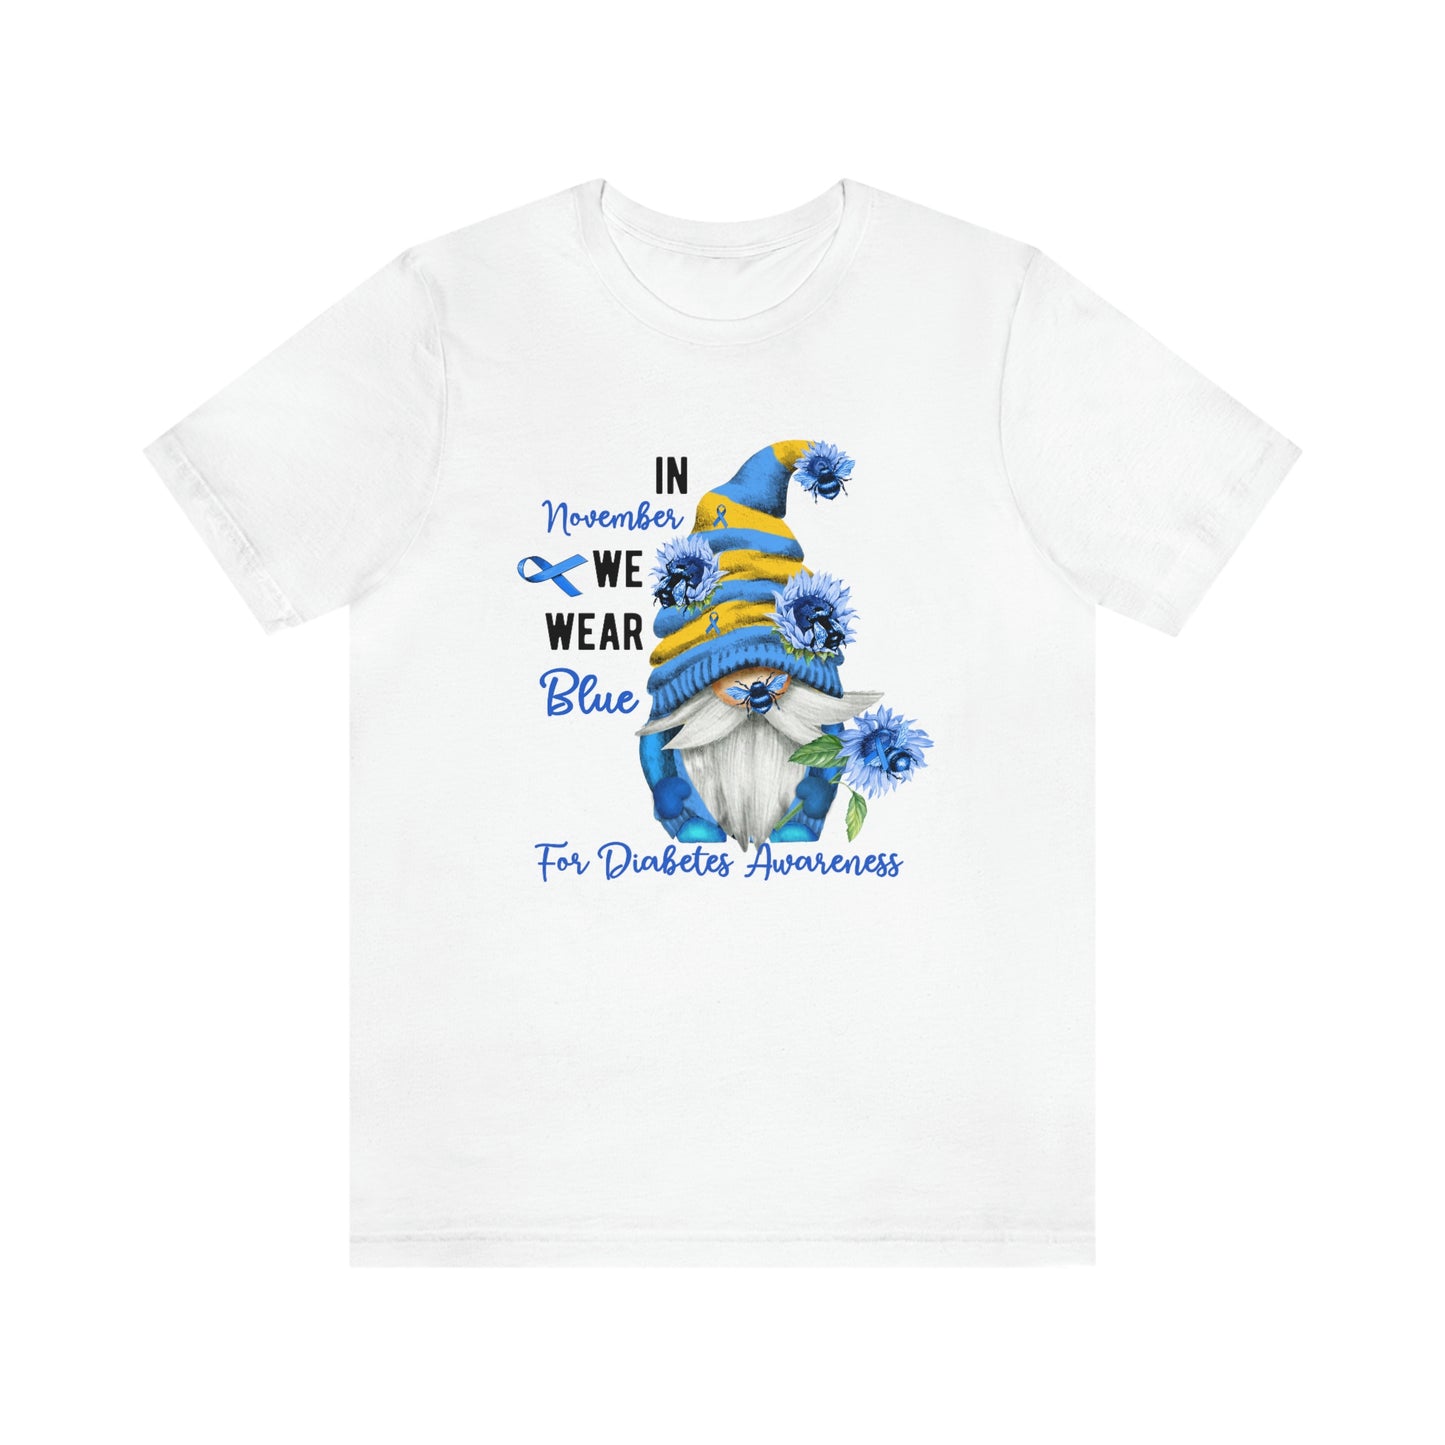 In November We Wear Blue Gnome Diabetes Awareness Print Unisex Jersey Short Sleeve Tee